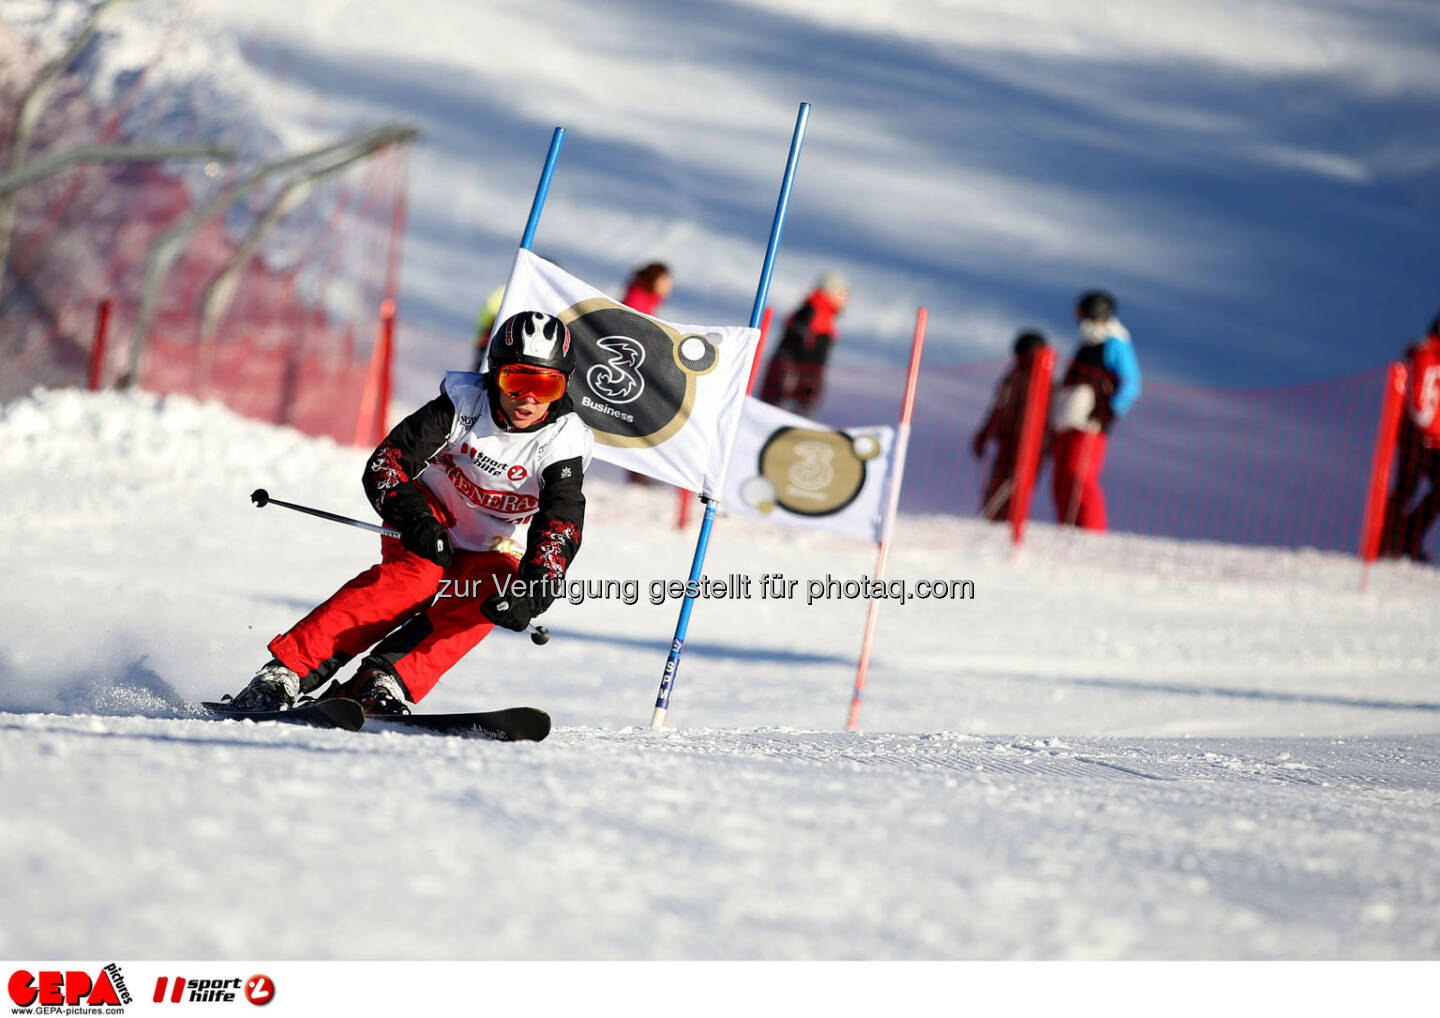 Ski for Gold Charity Race. Image shows Vera Russwurm. Photo: GEPA pictures/ Daniel Goetzhaber